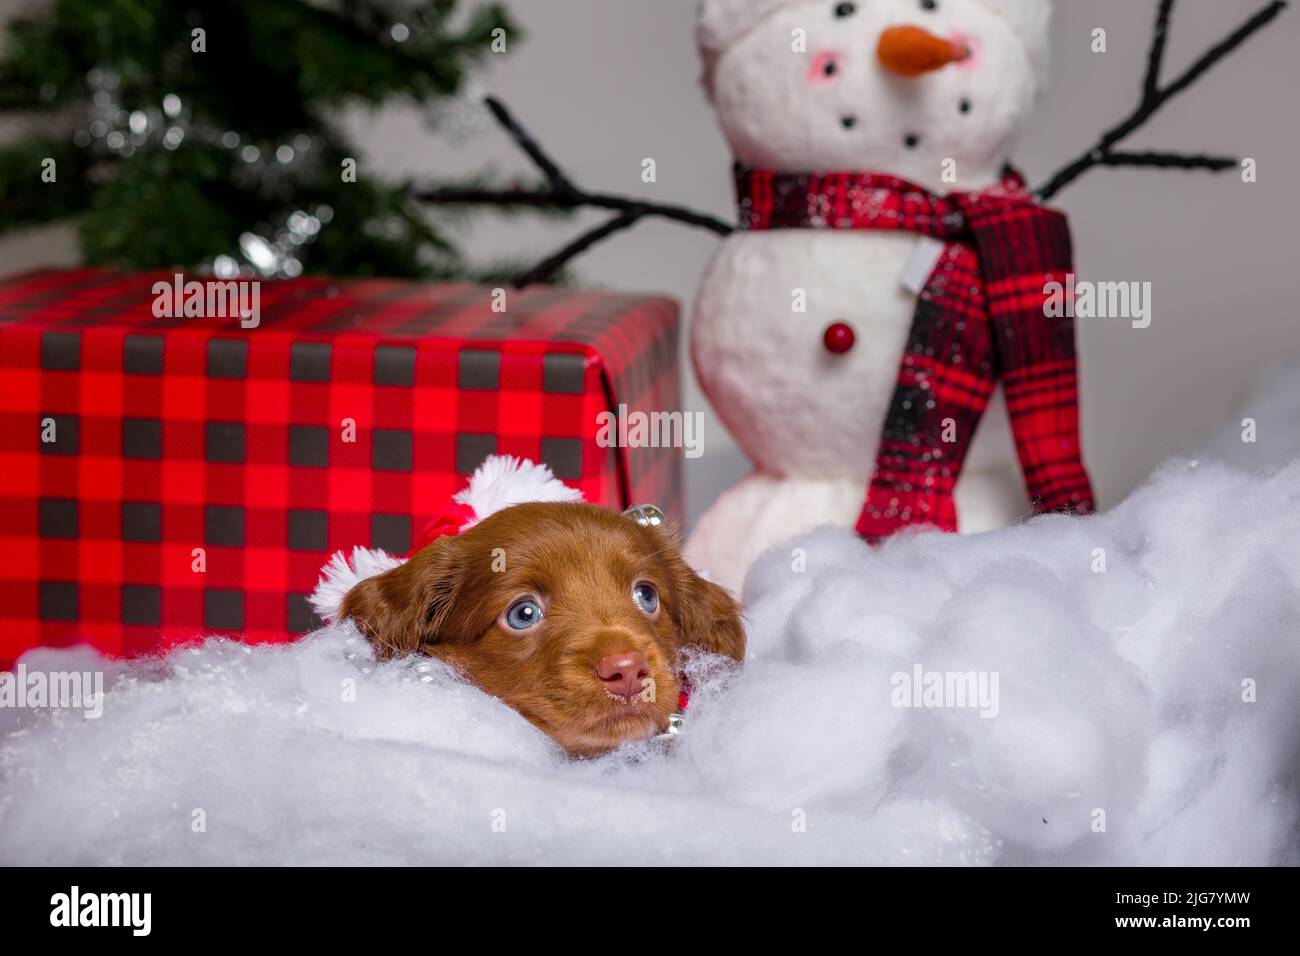 https://c8.alamy.com/comp/2JG7YMW/adorable-studio-portraits-of-dachshund-puppies-dressed-up-2JG7YMW.jpg